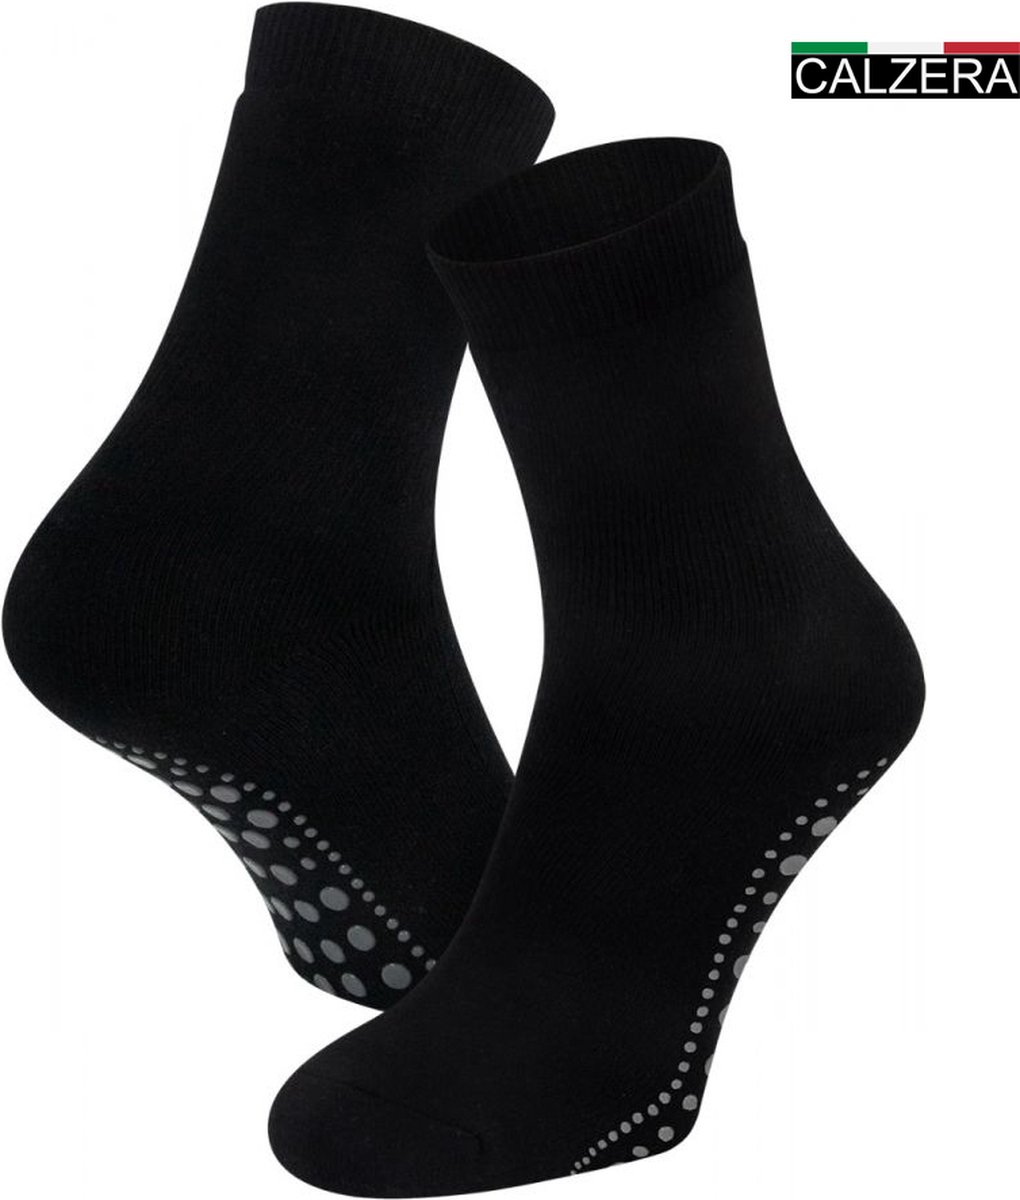 Calzera Huissokken anti slip - Antislip sokken - ABS - Zwart - Maat 39-42